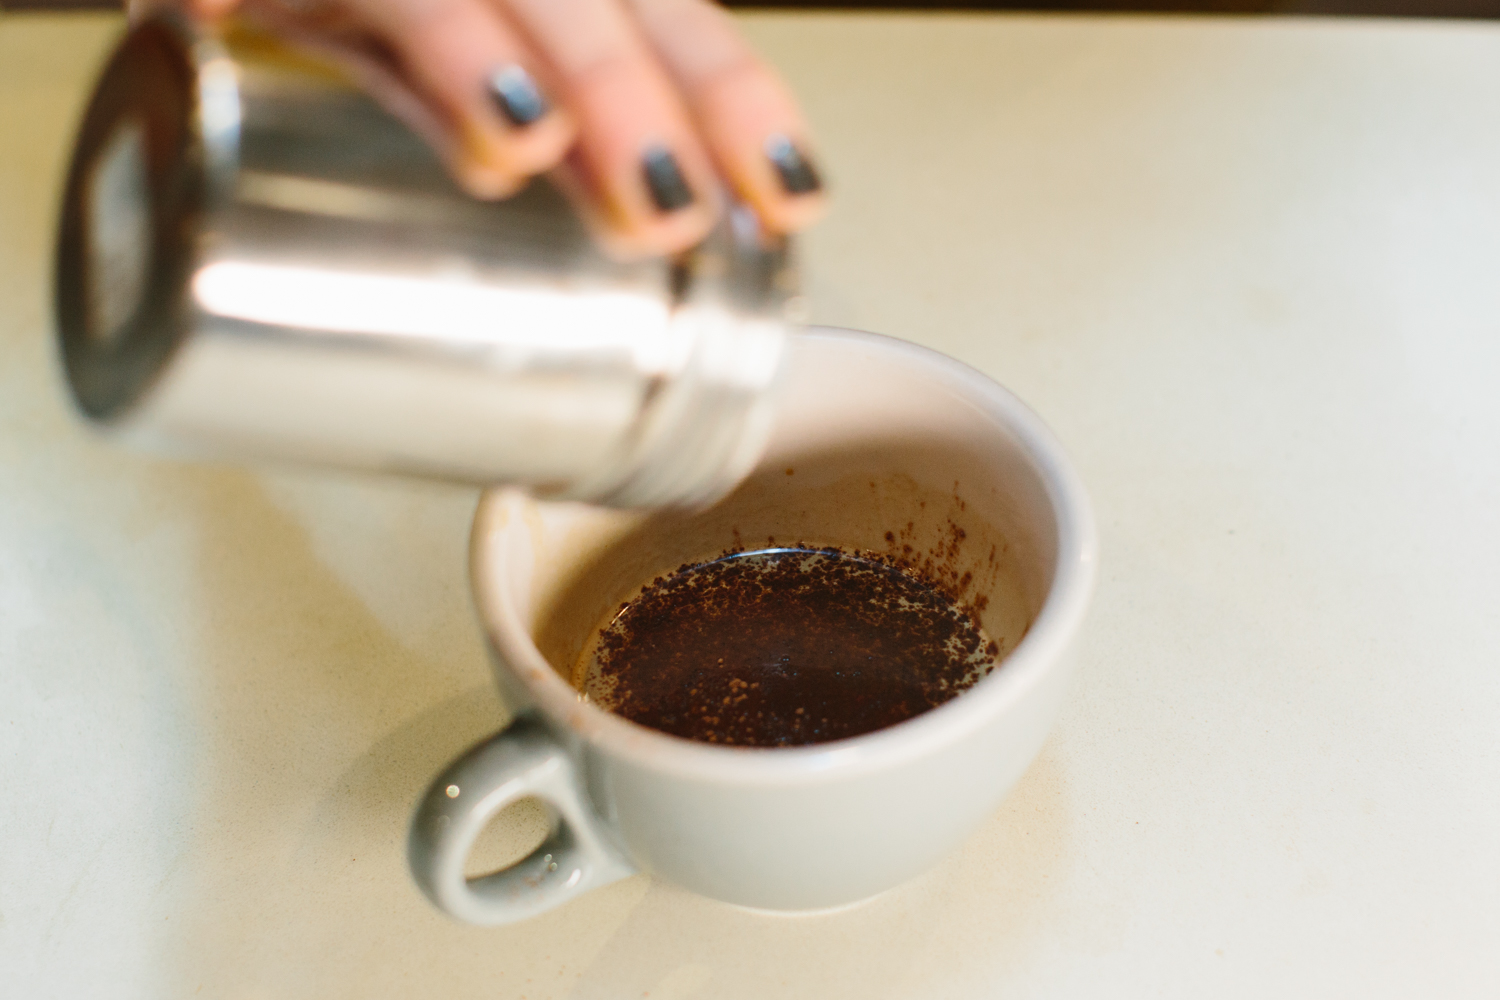 Image of cocoa powder going into a mug